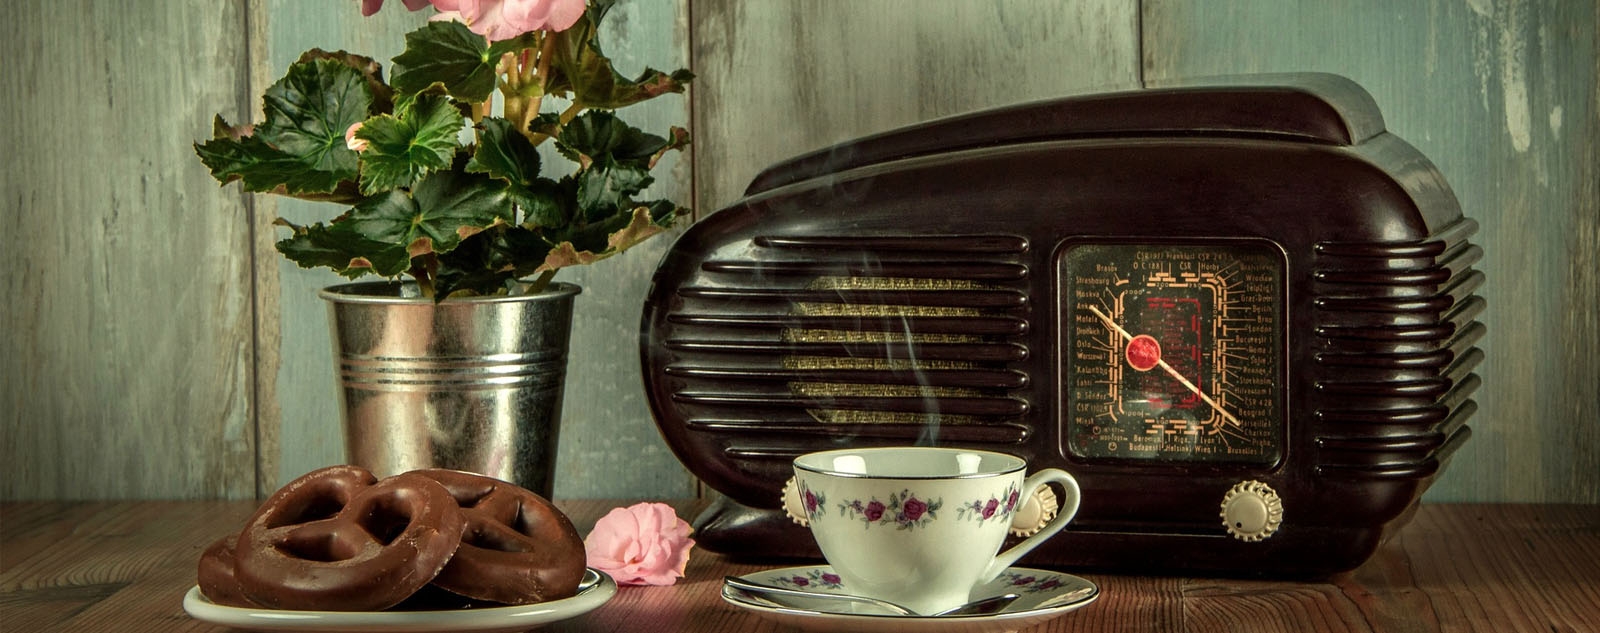 portrait of vintage radio, vase with flowers, and tea things